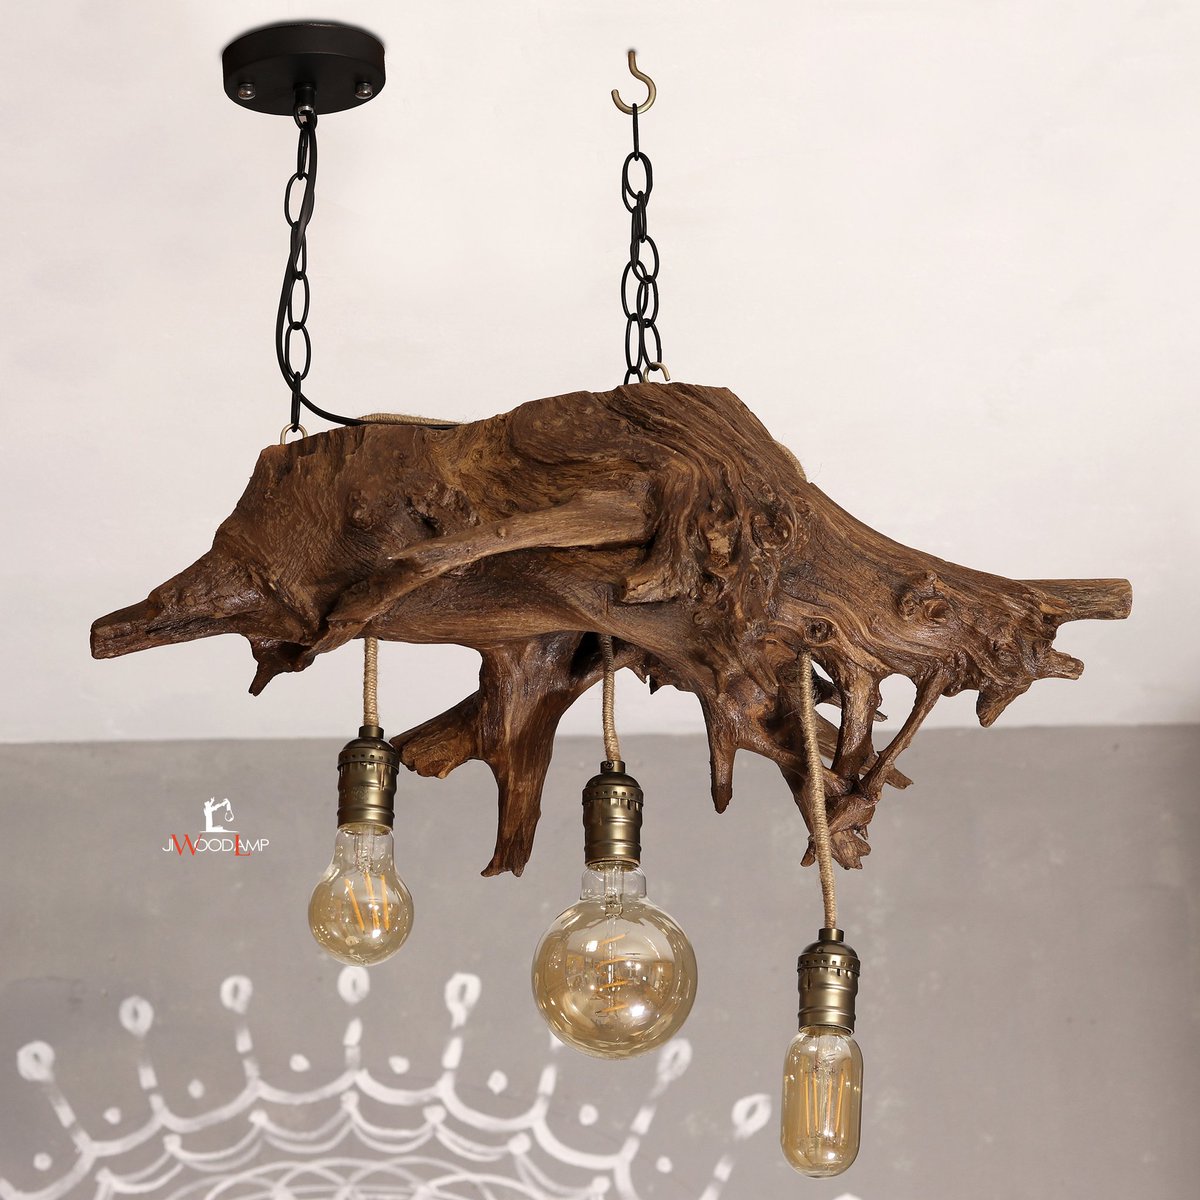 Three-bulb driftwood pendant lighting🤗
Available etsy.com/listing/764478…
.
.
.
#driftwood #driftwoodlight #woodlamp #woodlight #woodlights #woodlamps #ceilingfixture #threebulblight #rustic #rusticlight #homedecor